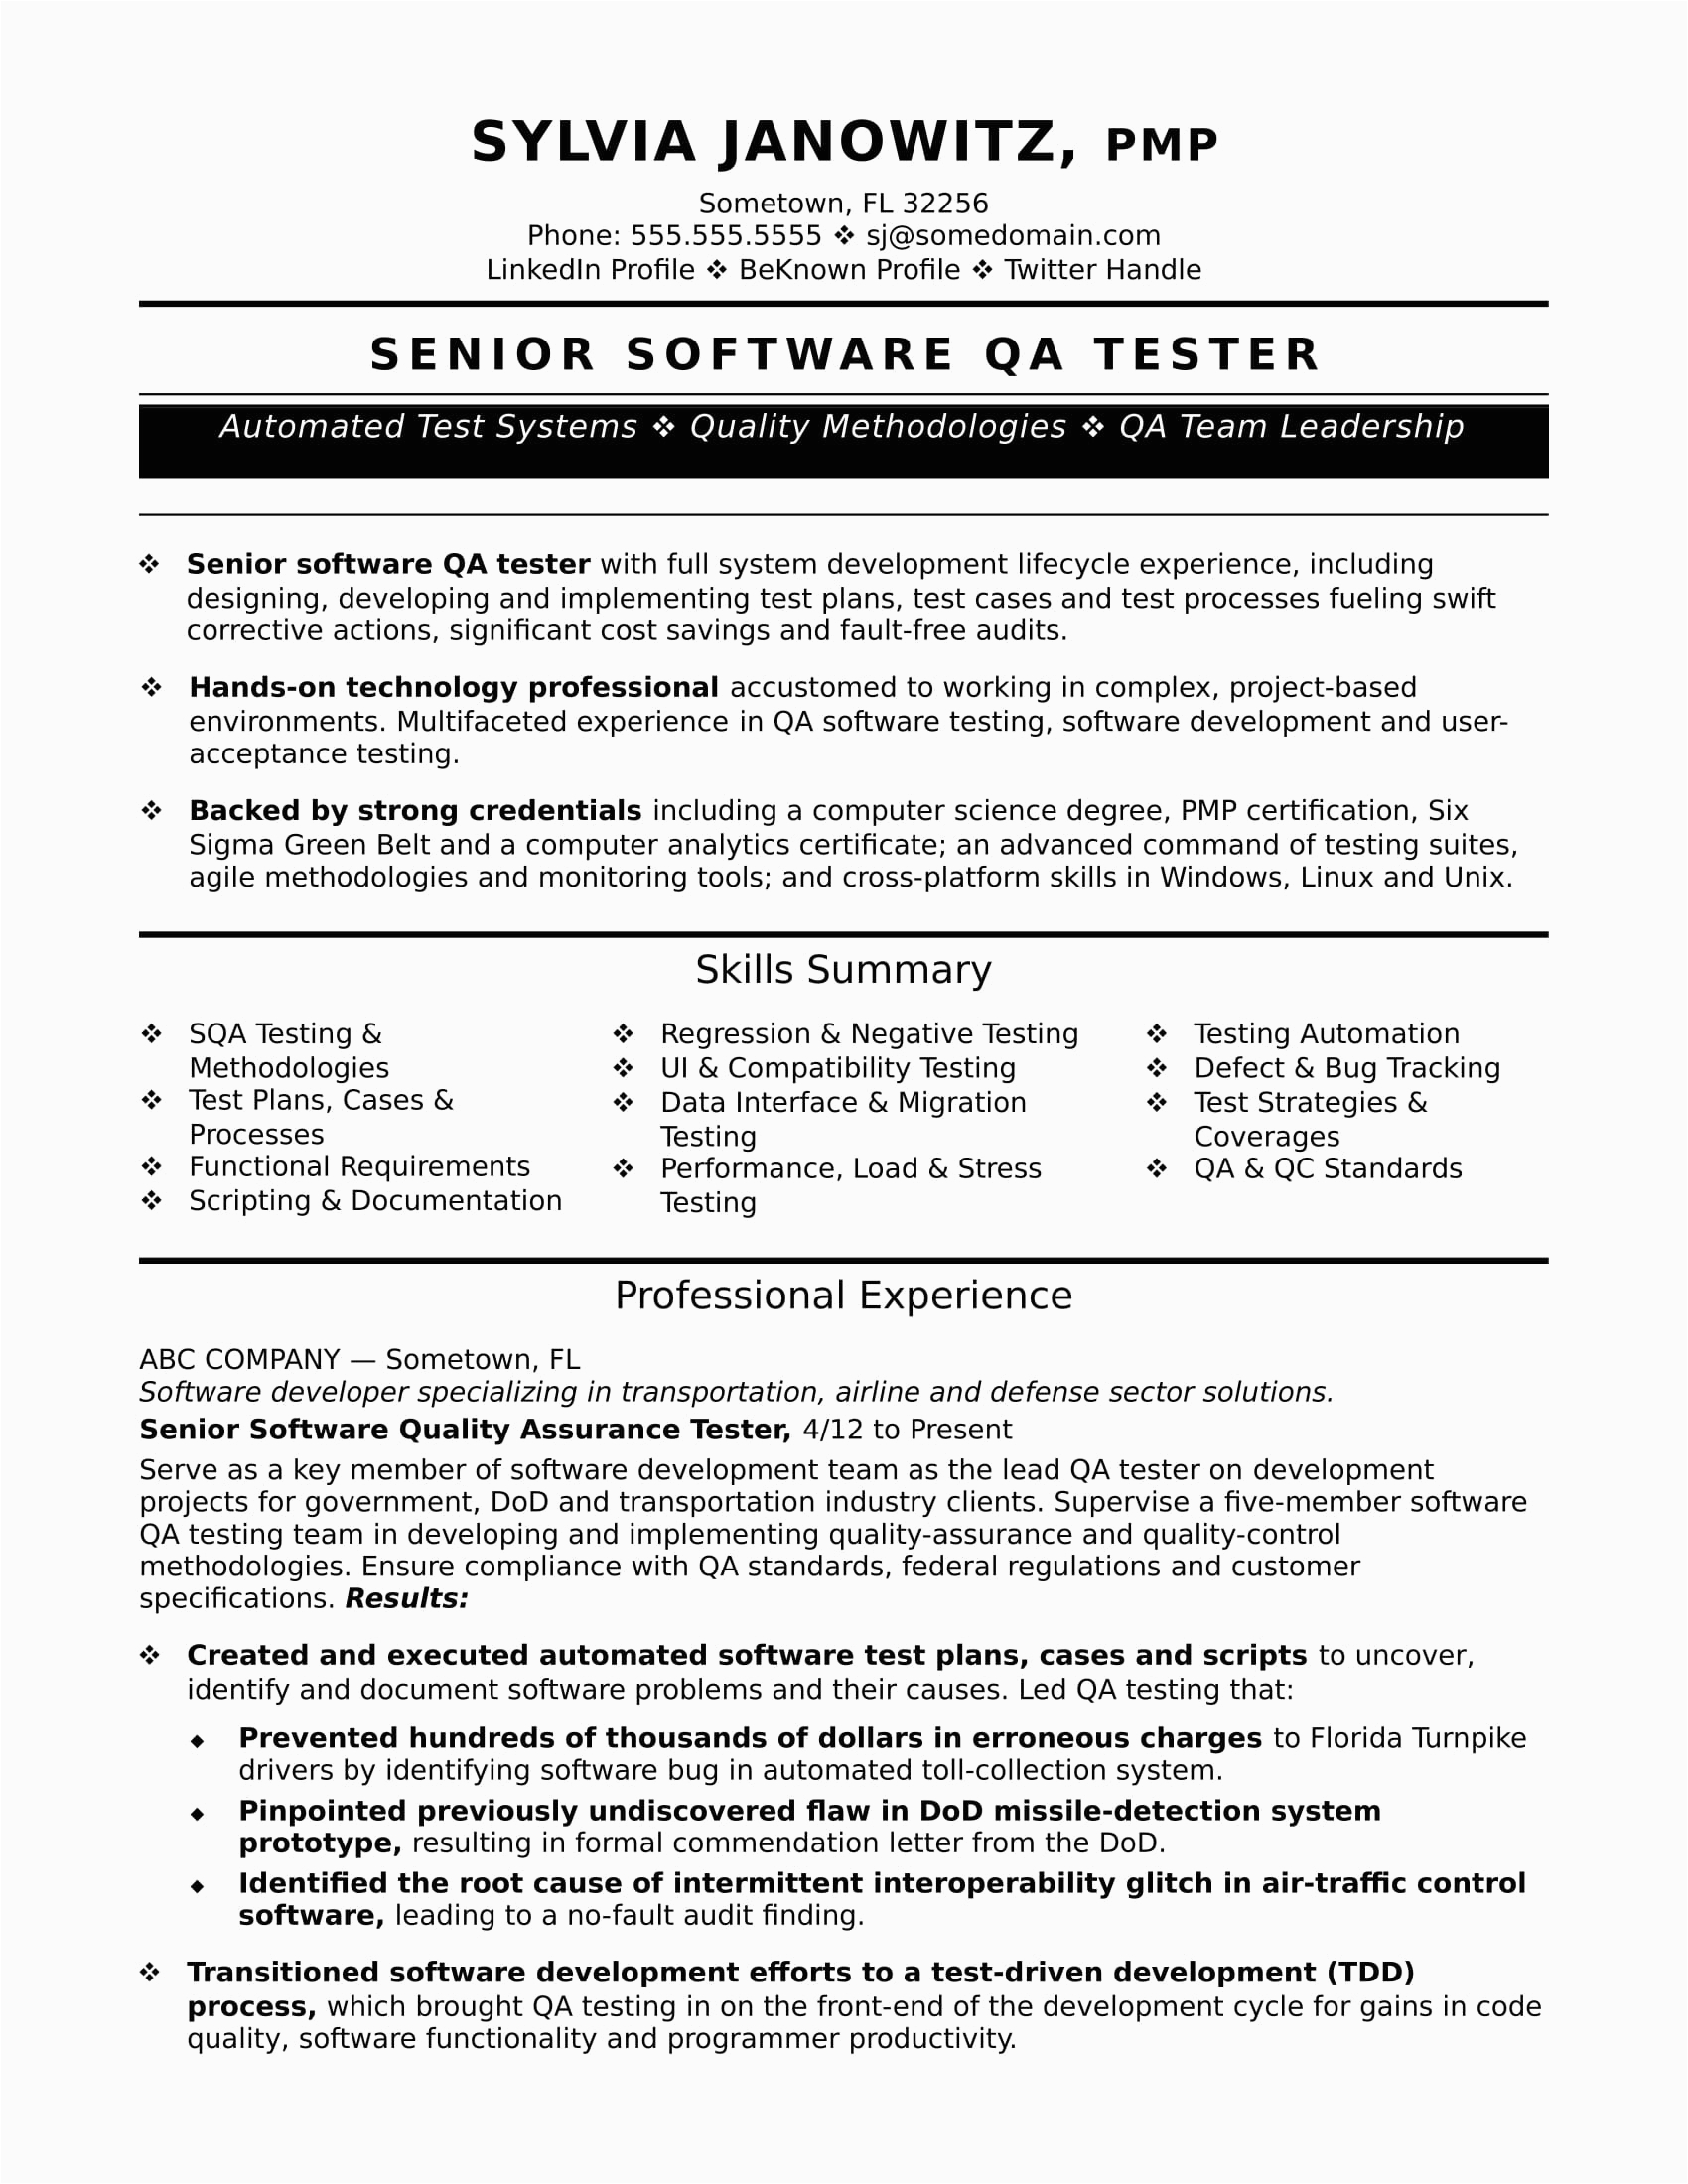 Sample Resume for Experienced Qa Tester Experienced Qa software Tester Resume Sample